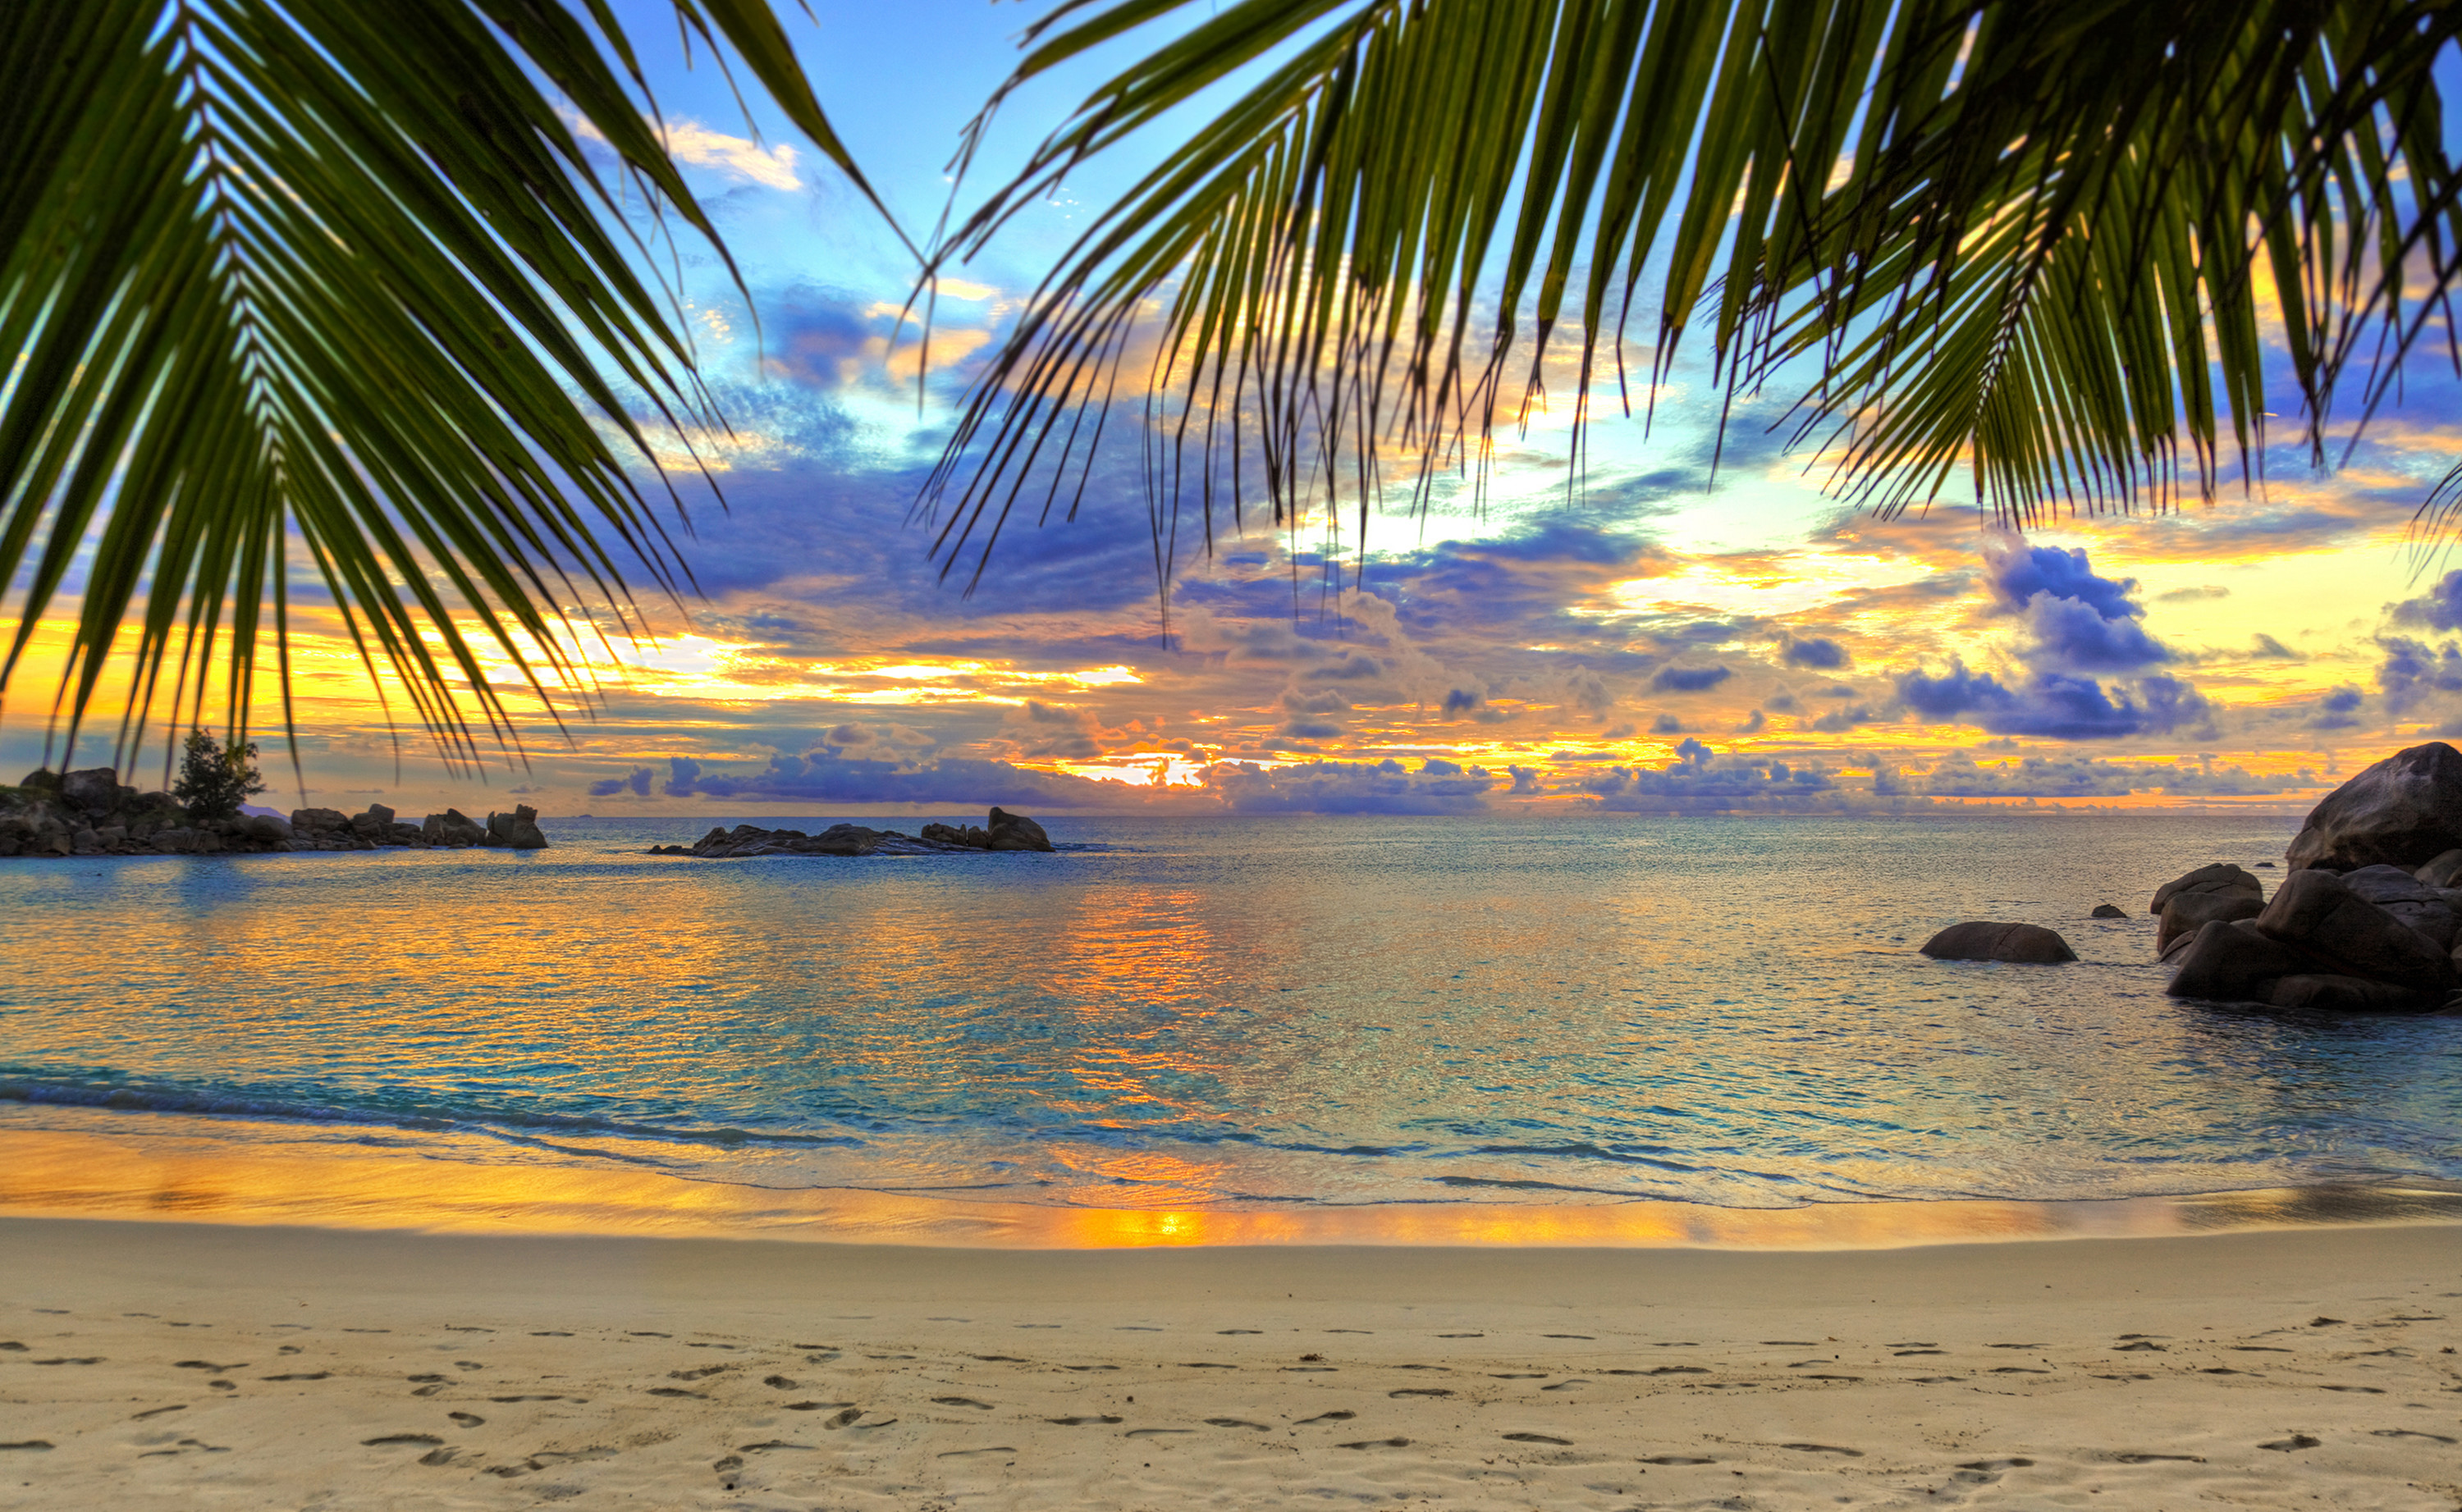 3000x1843 Earth - Beach Sea Palm Tree Sand Sunset Nature Sky Tropical Ocean Horizon  Wallpaper